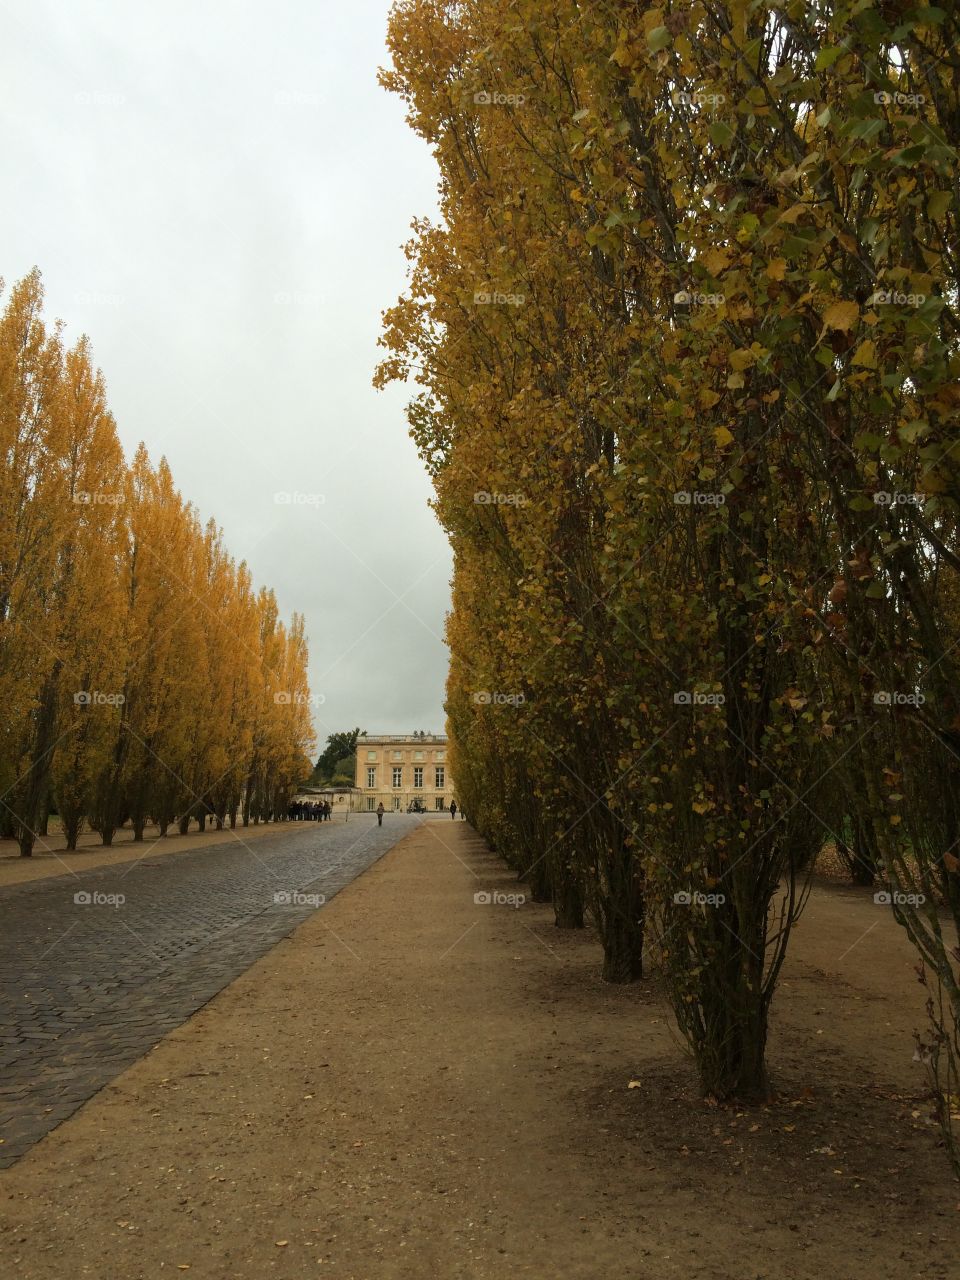 Versailles walkway with trees